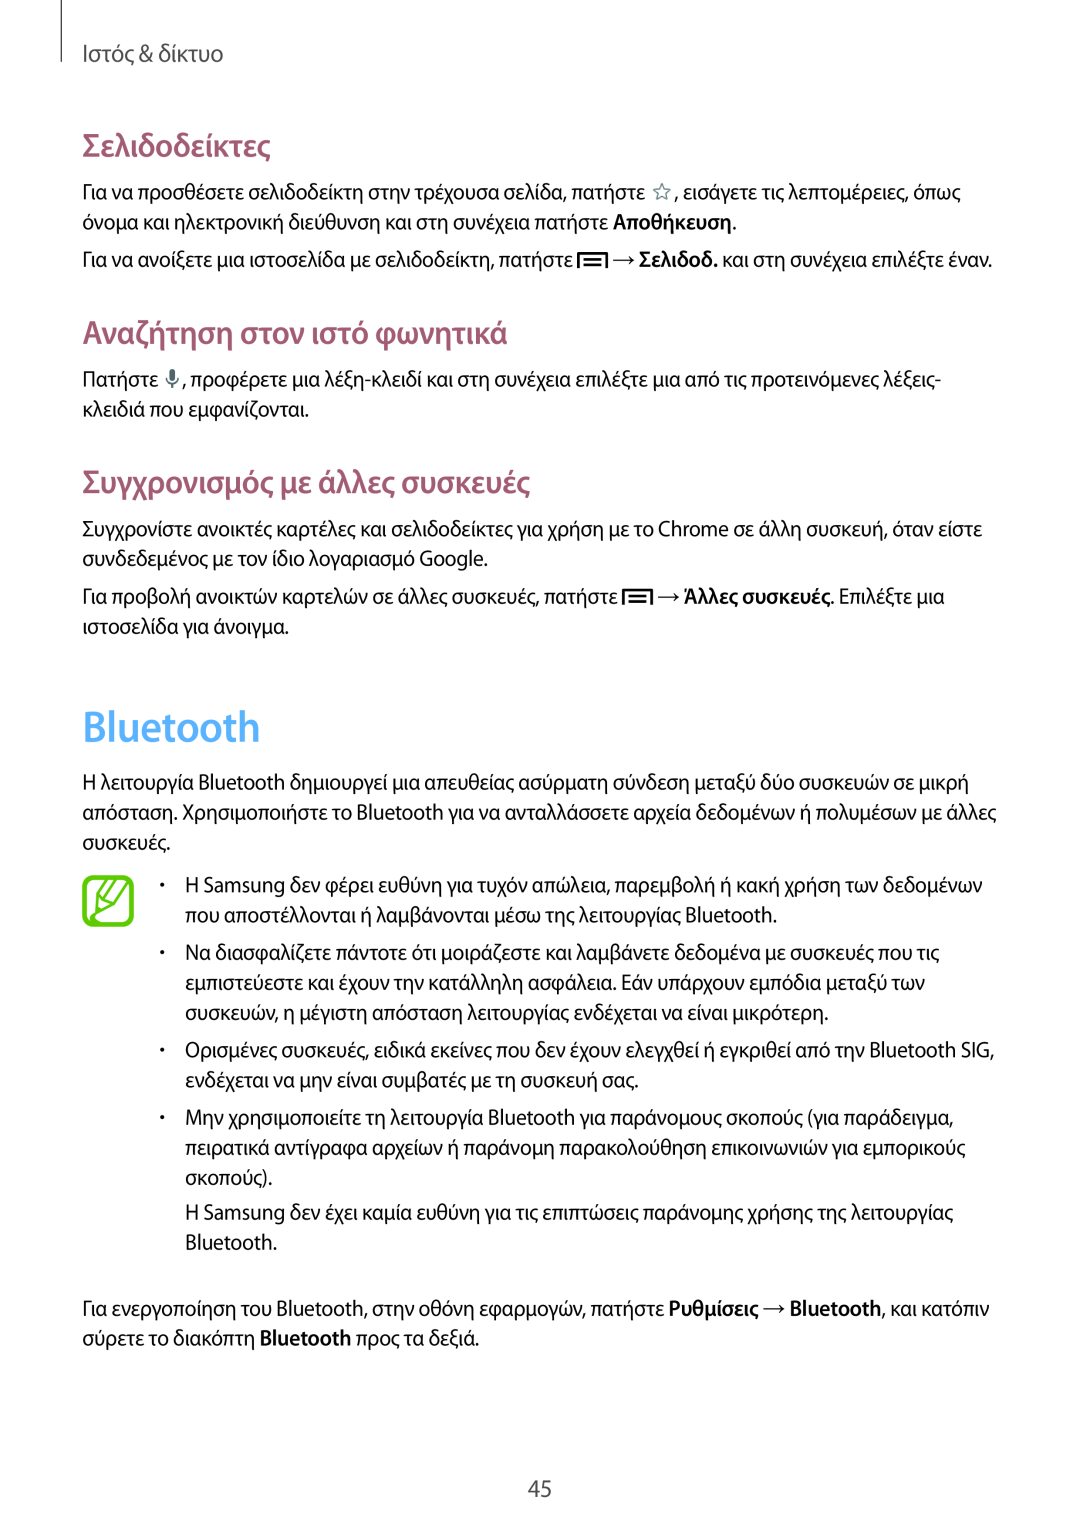 Samsung GT-P5210ZWAEUR manual Bluetooth, Συγχρονισμός με άλλες συσκευές, Σελιδοδείκτες, Αναζήτηση στον ιστό φωνητικά 